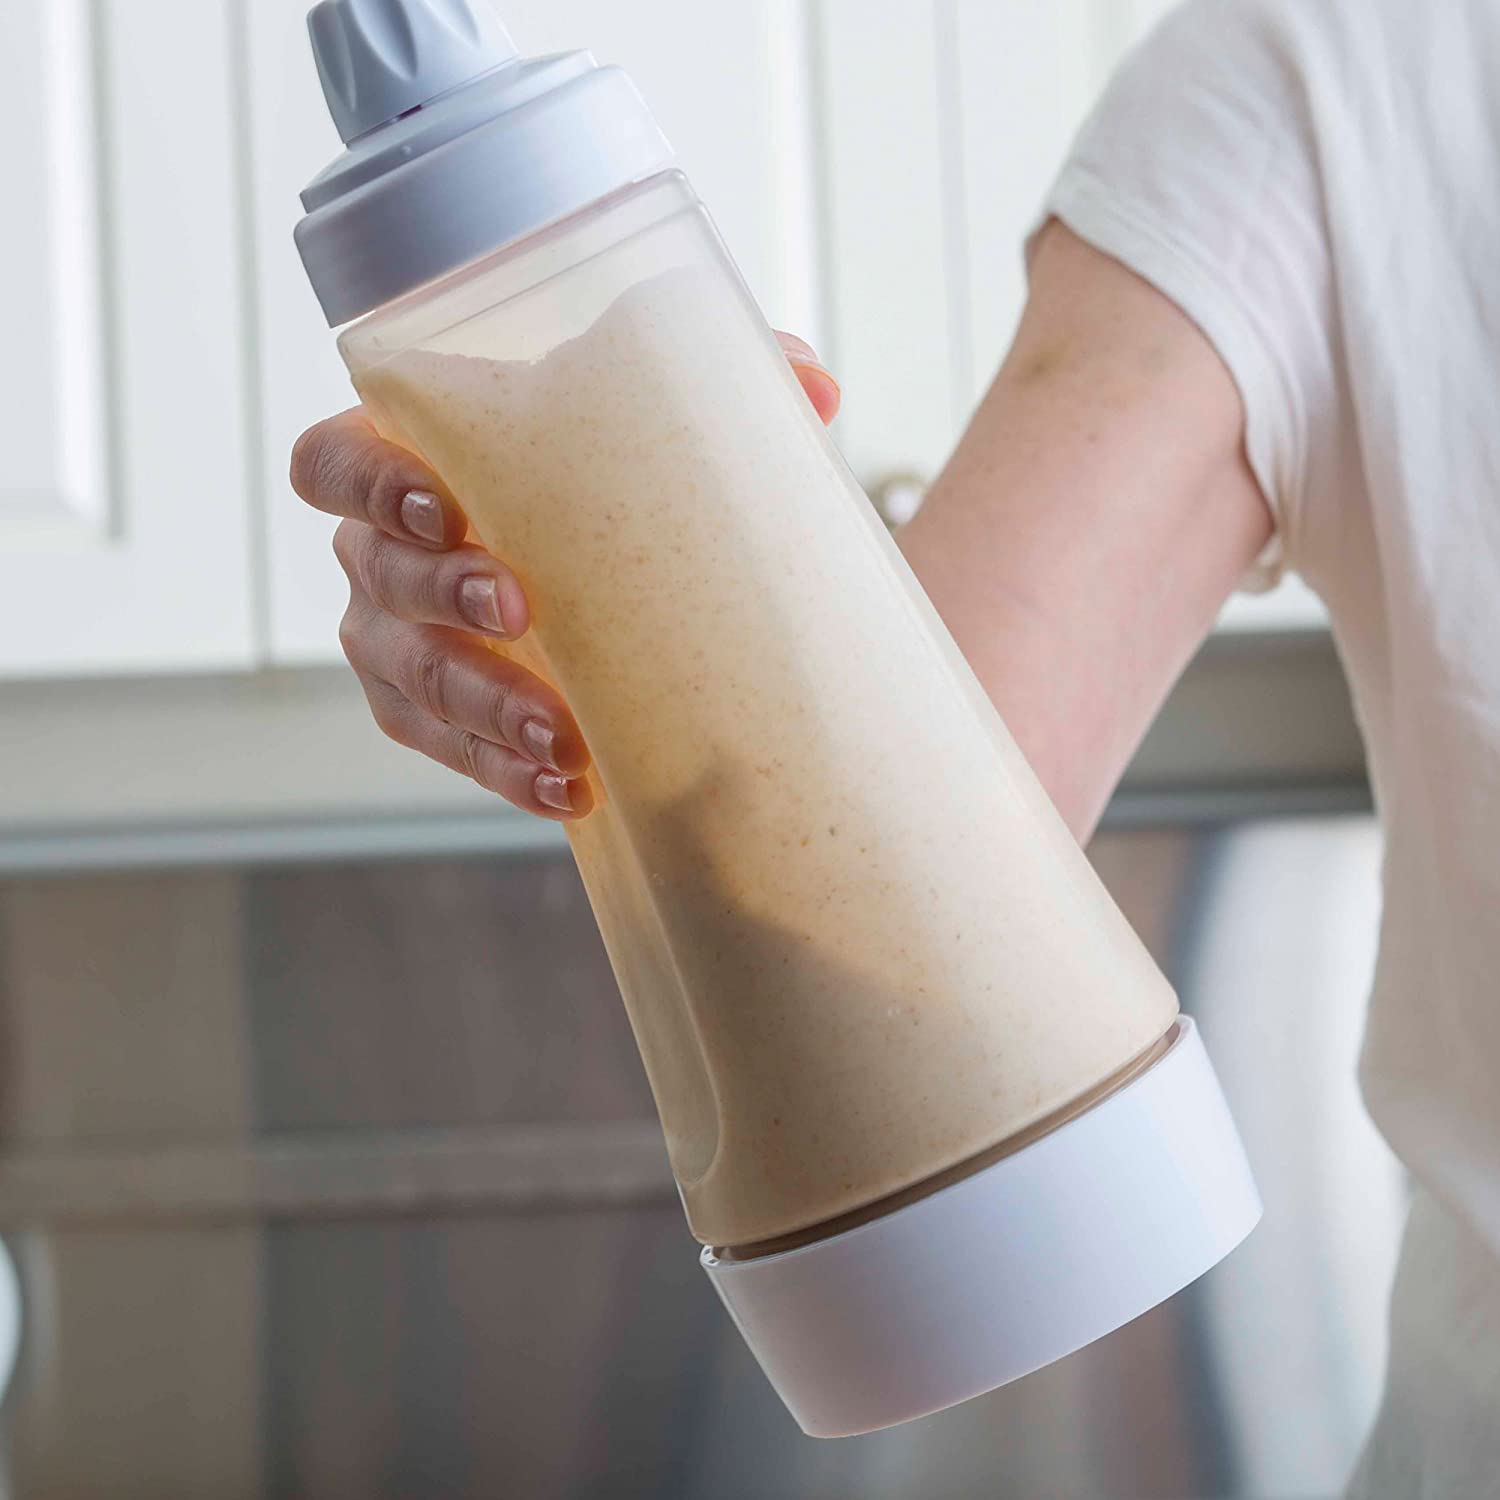 pancake batter shaker bottle - cool kitchen gadgets that work